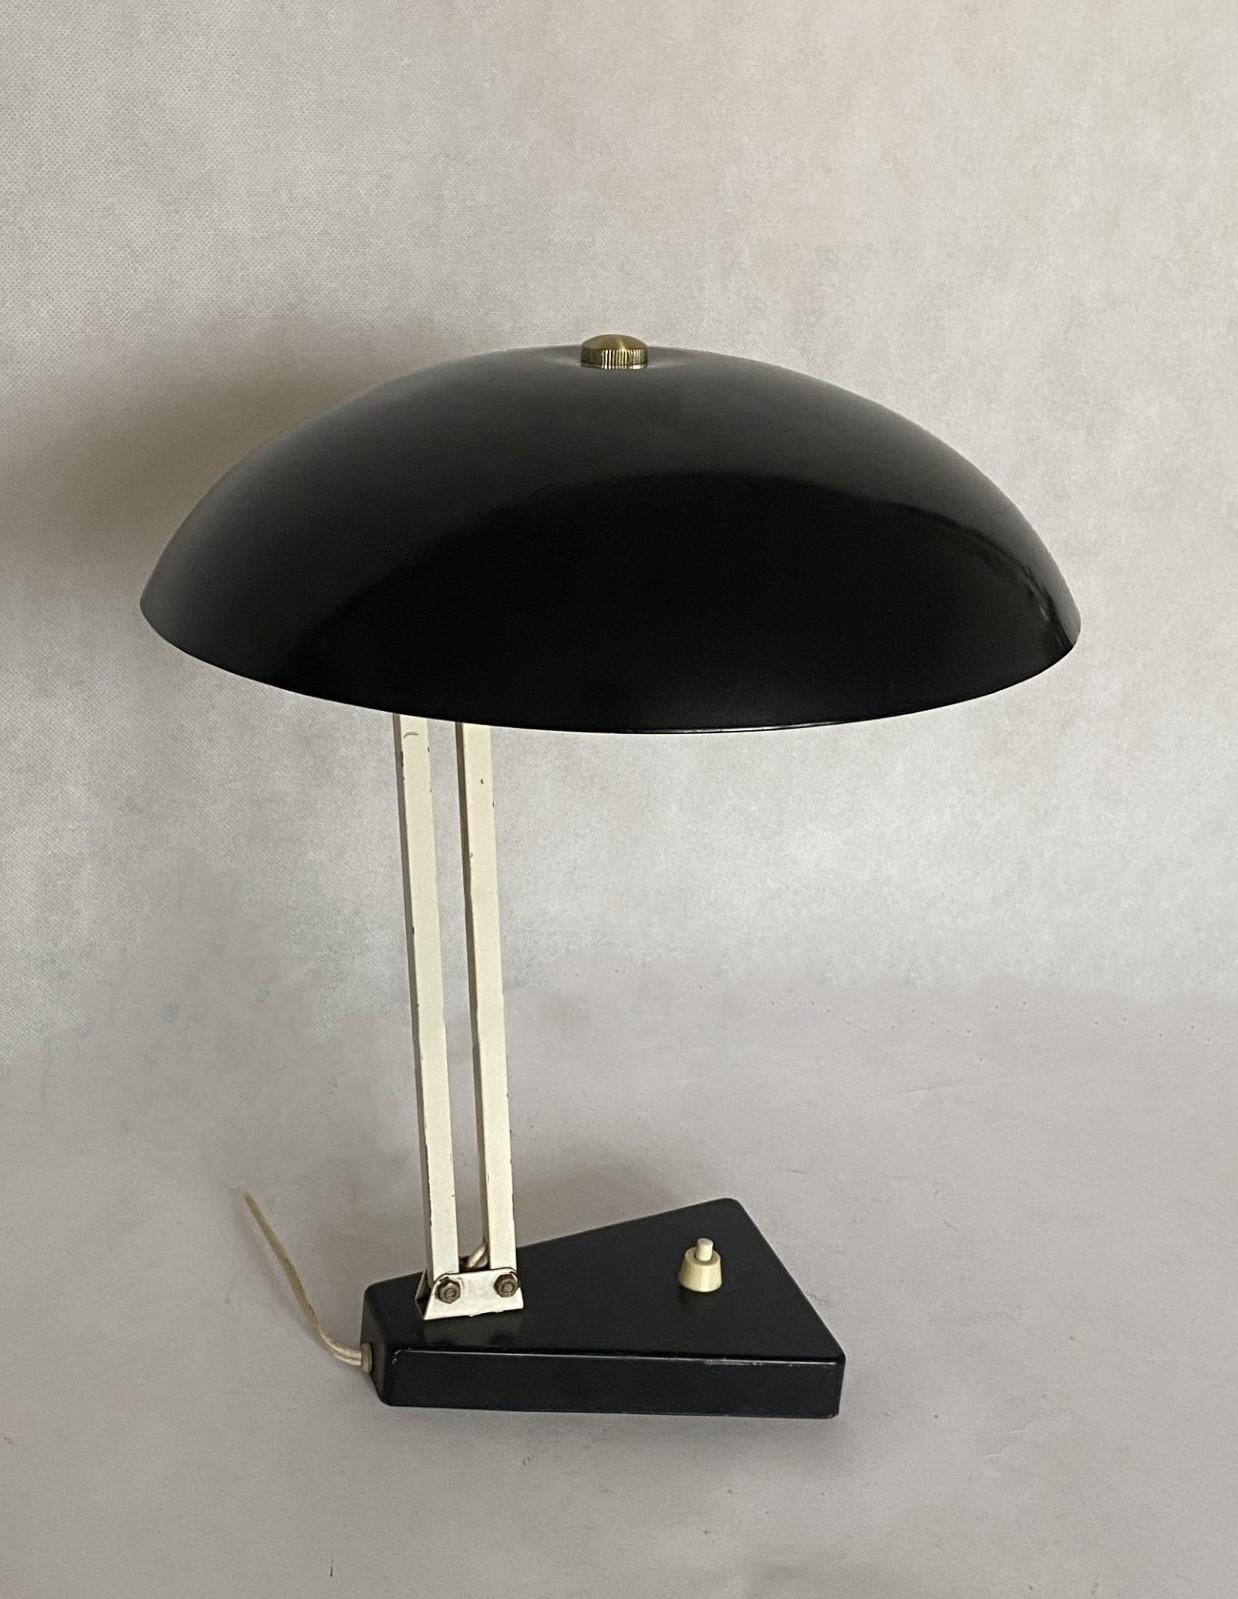 Midcentury Bauhaus Desk Table Lamp Black Enameled Metal, 1950s For Sale 4